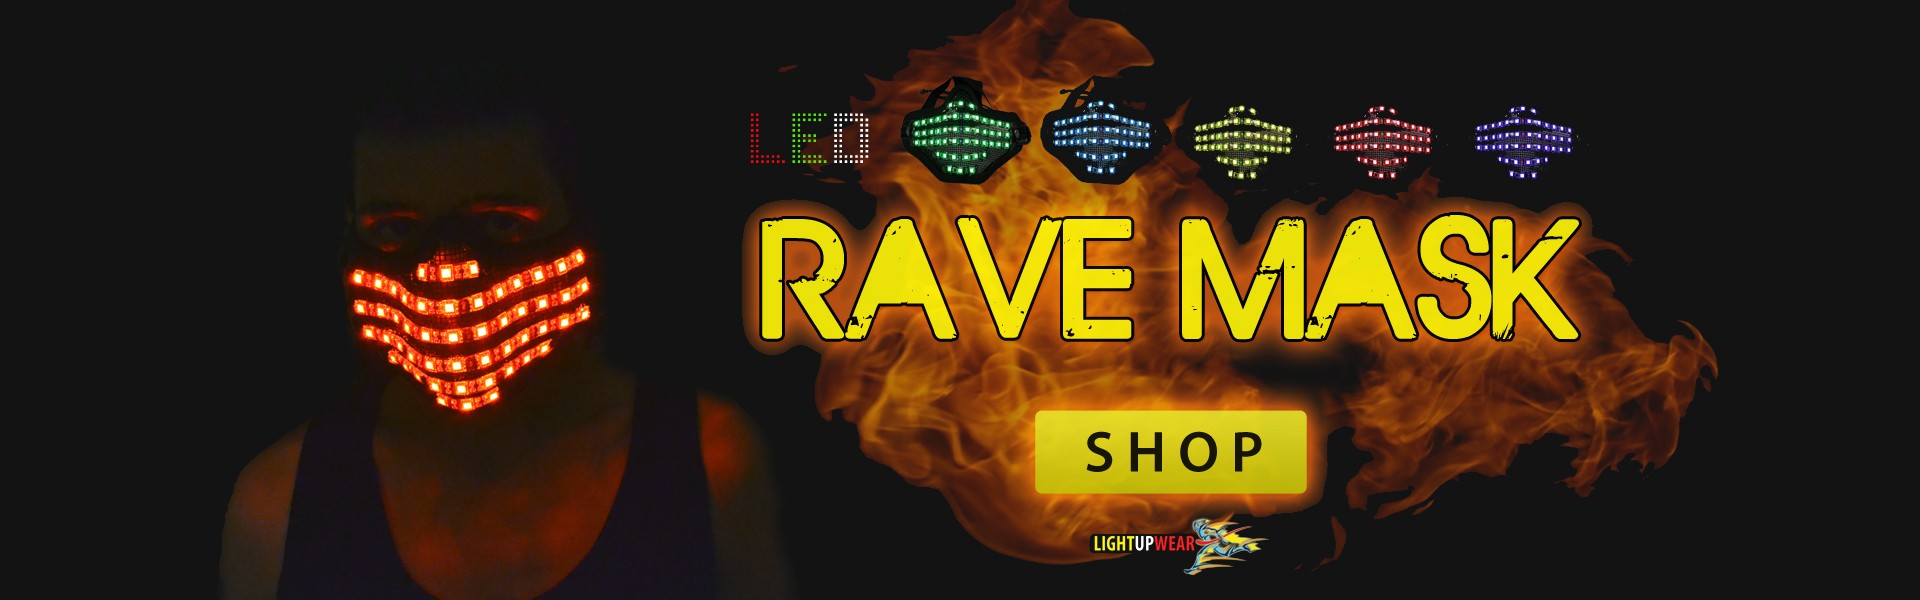 Light Up Rave Mask